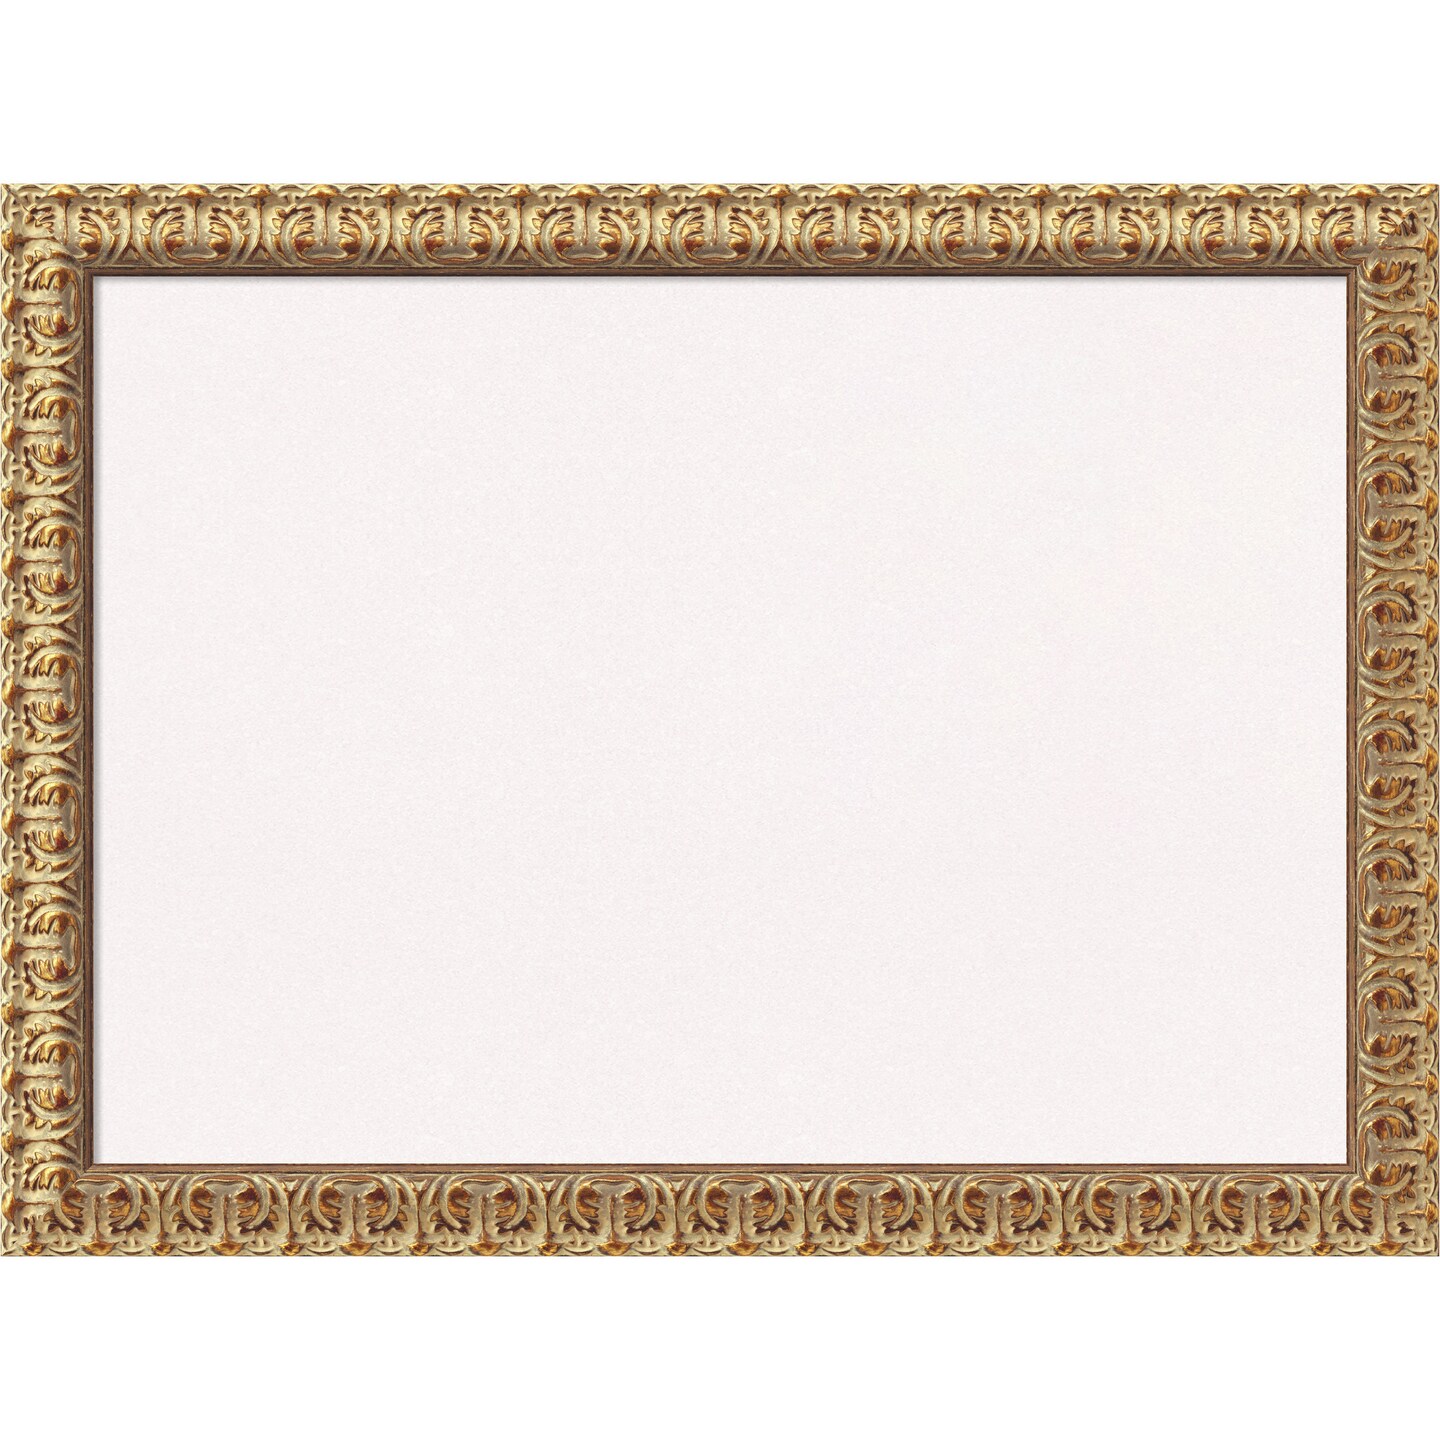 Gold Wood Frame | 16x20